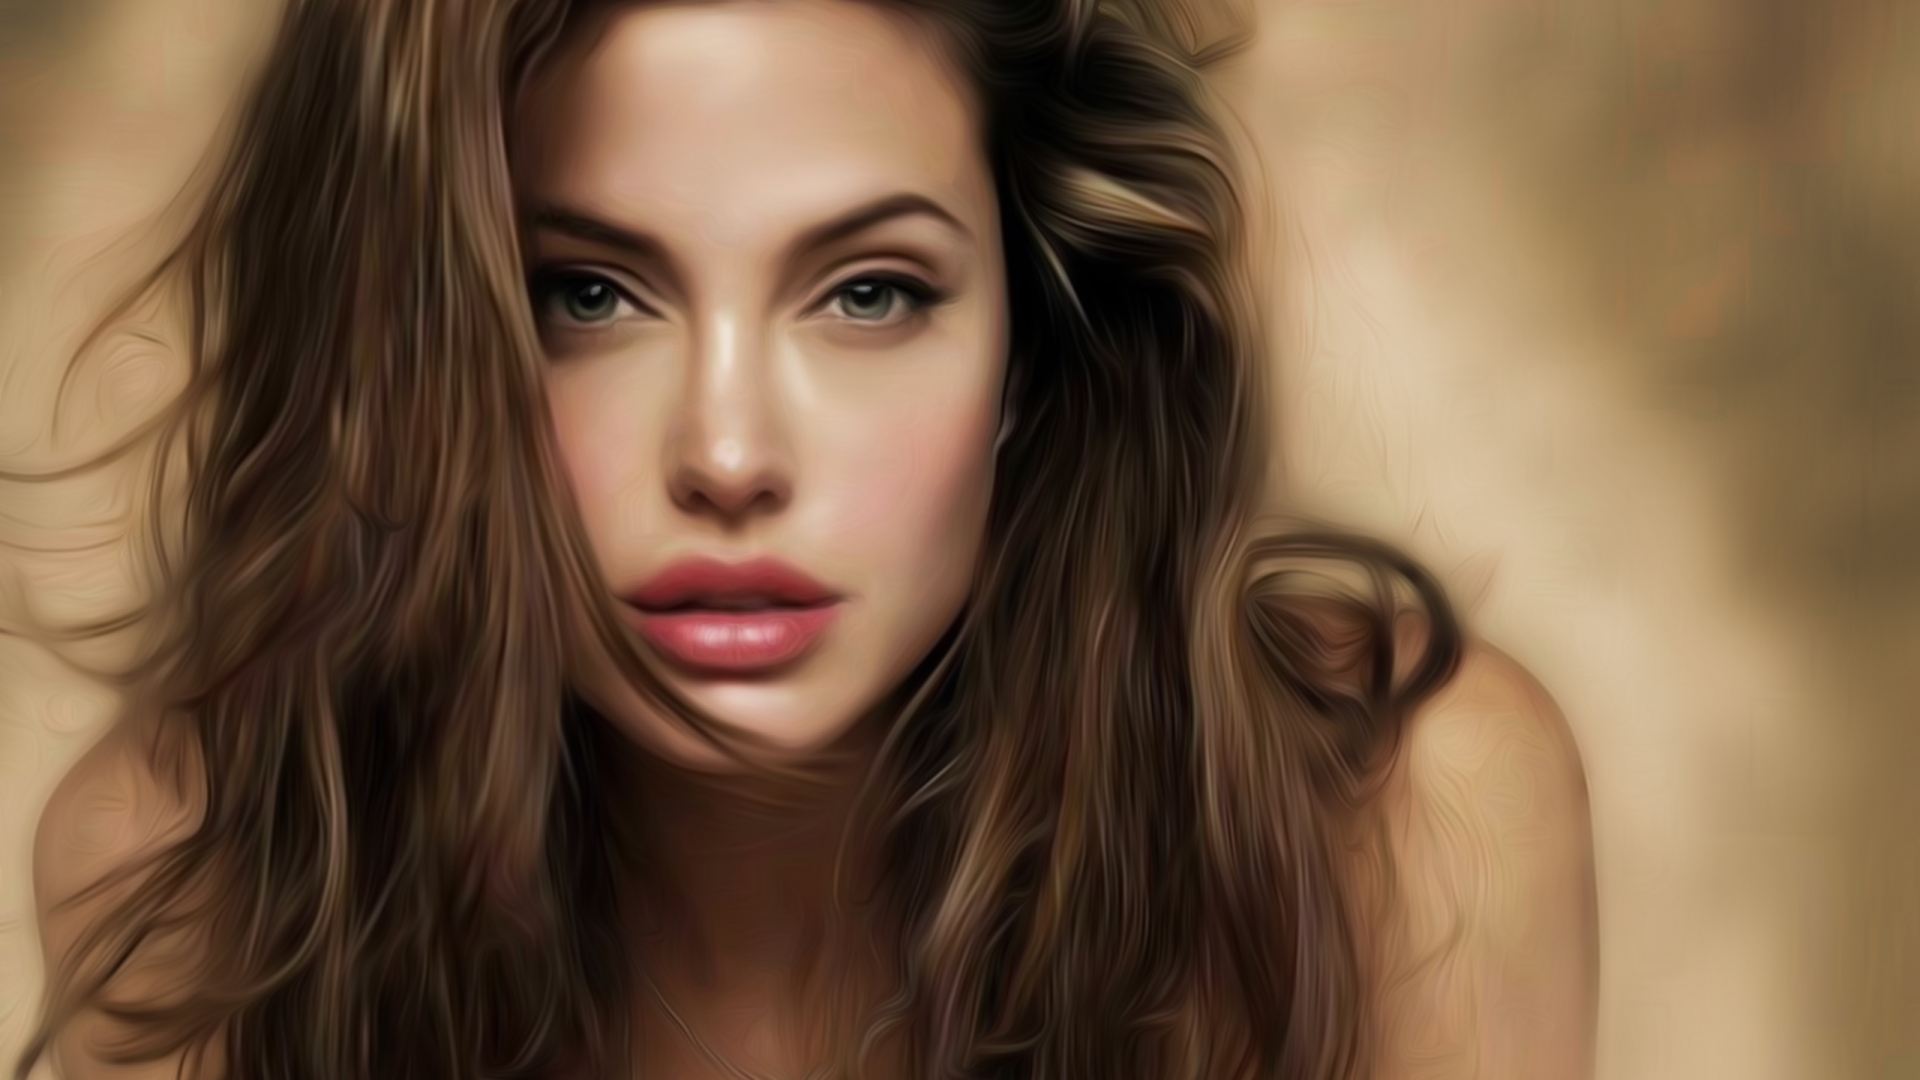 Angelina Jolie Look Art for 1920 x 1080 HDTV 1080p resolution